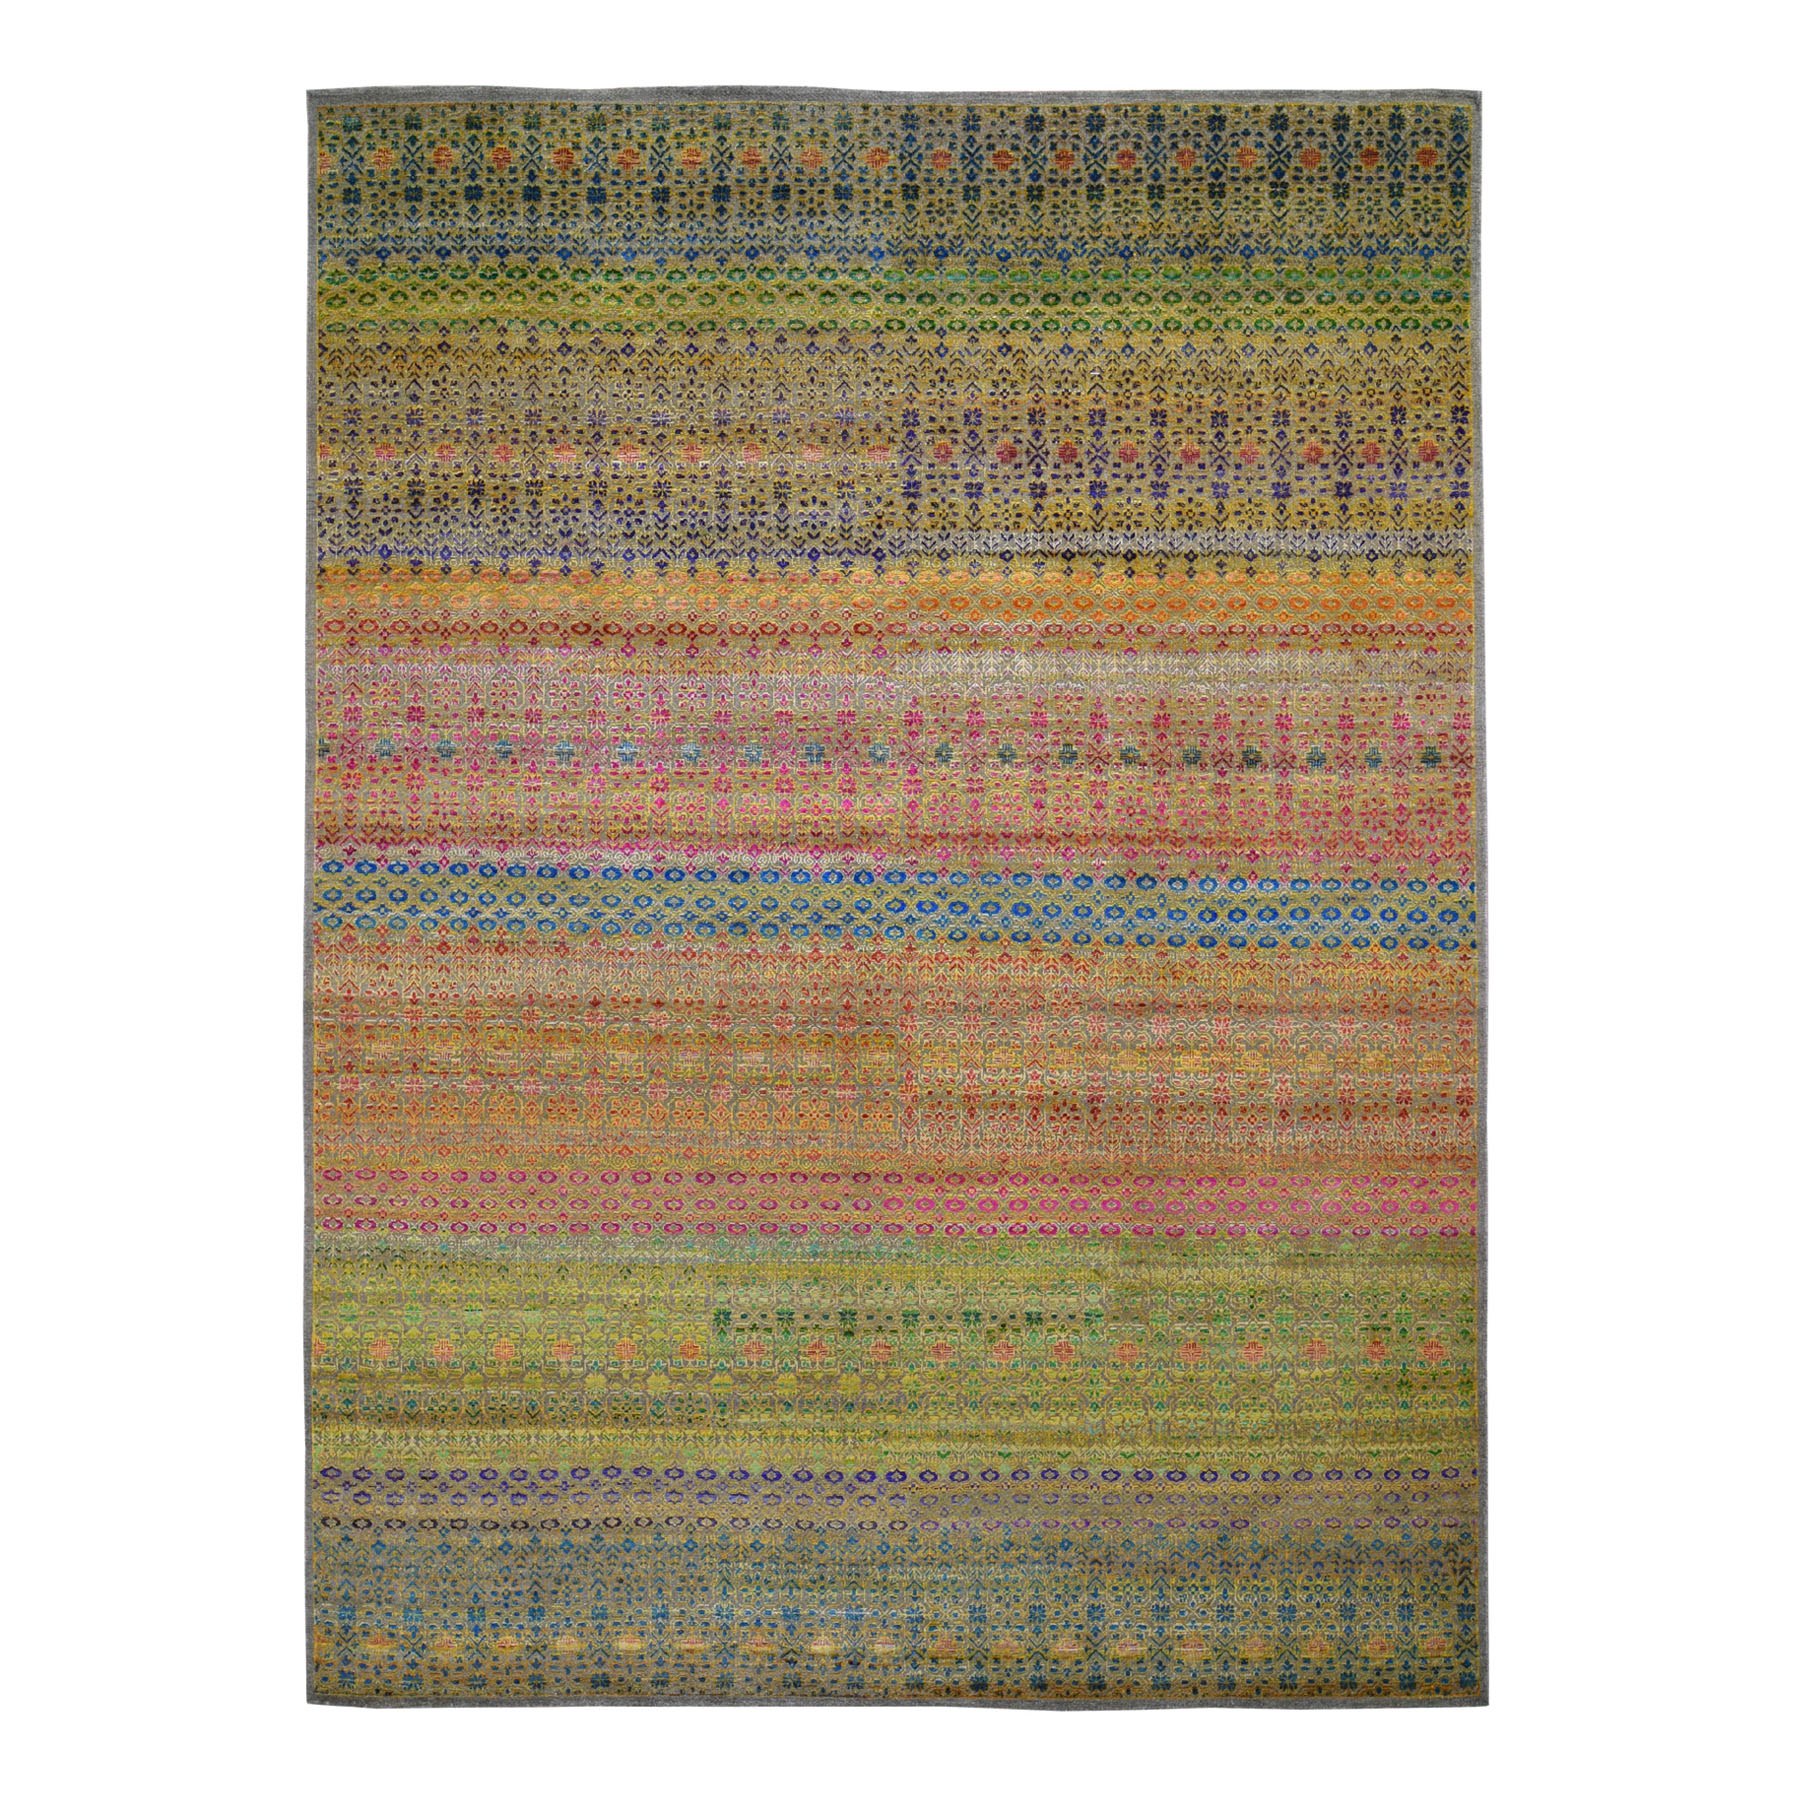 8'10"x12' Colorful Grass Design Sari Silk Textured Wool Modern Hand Woven Oriental Rug 